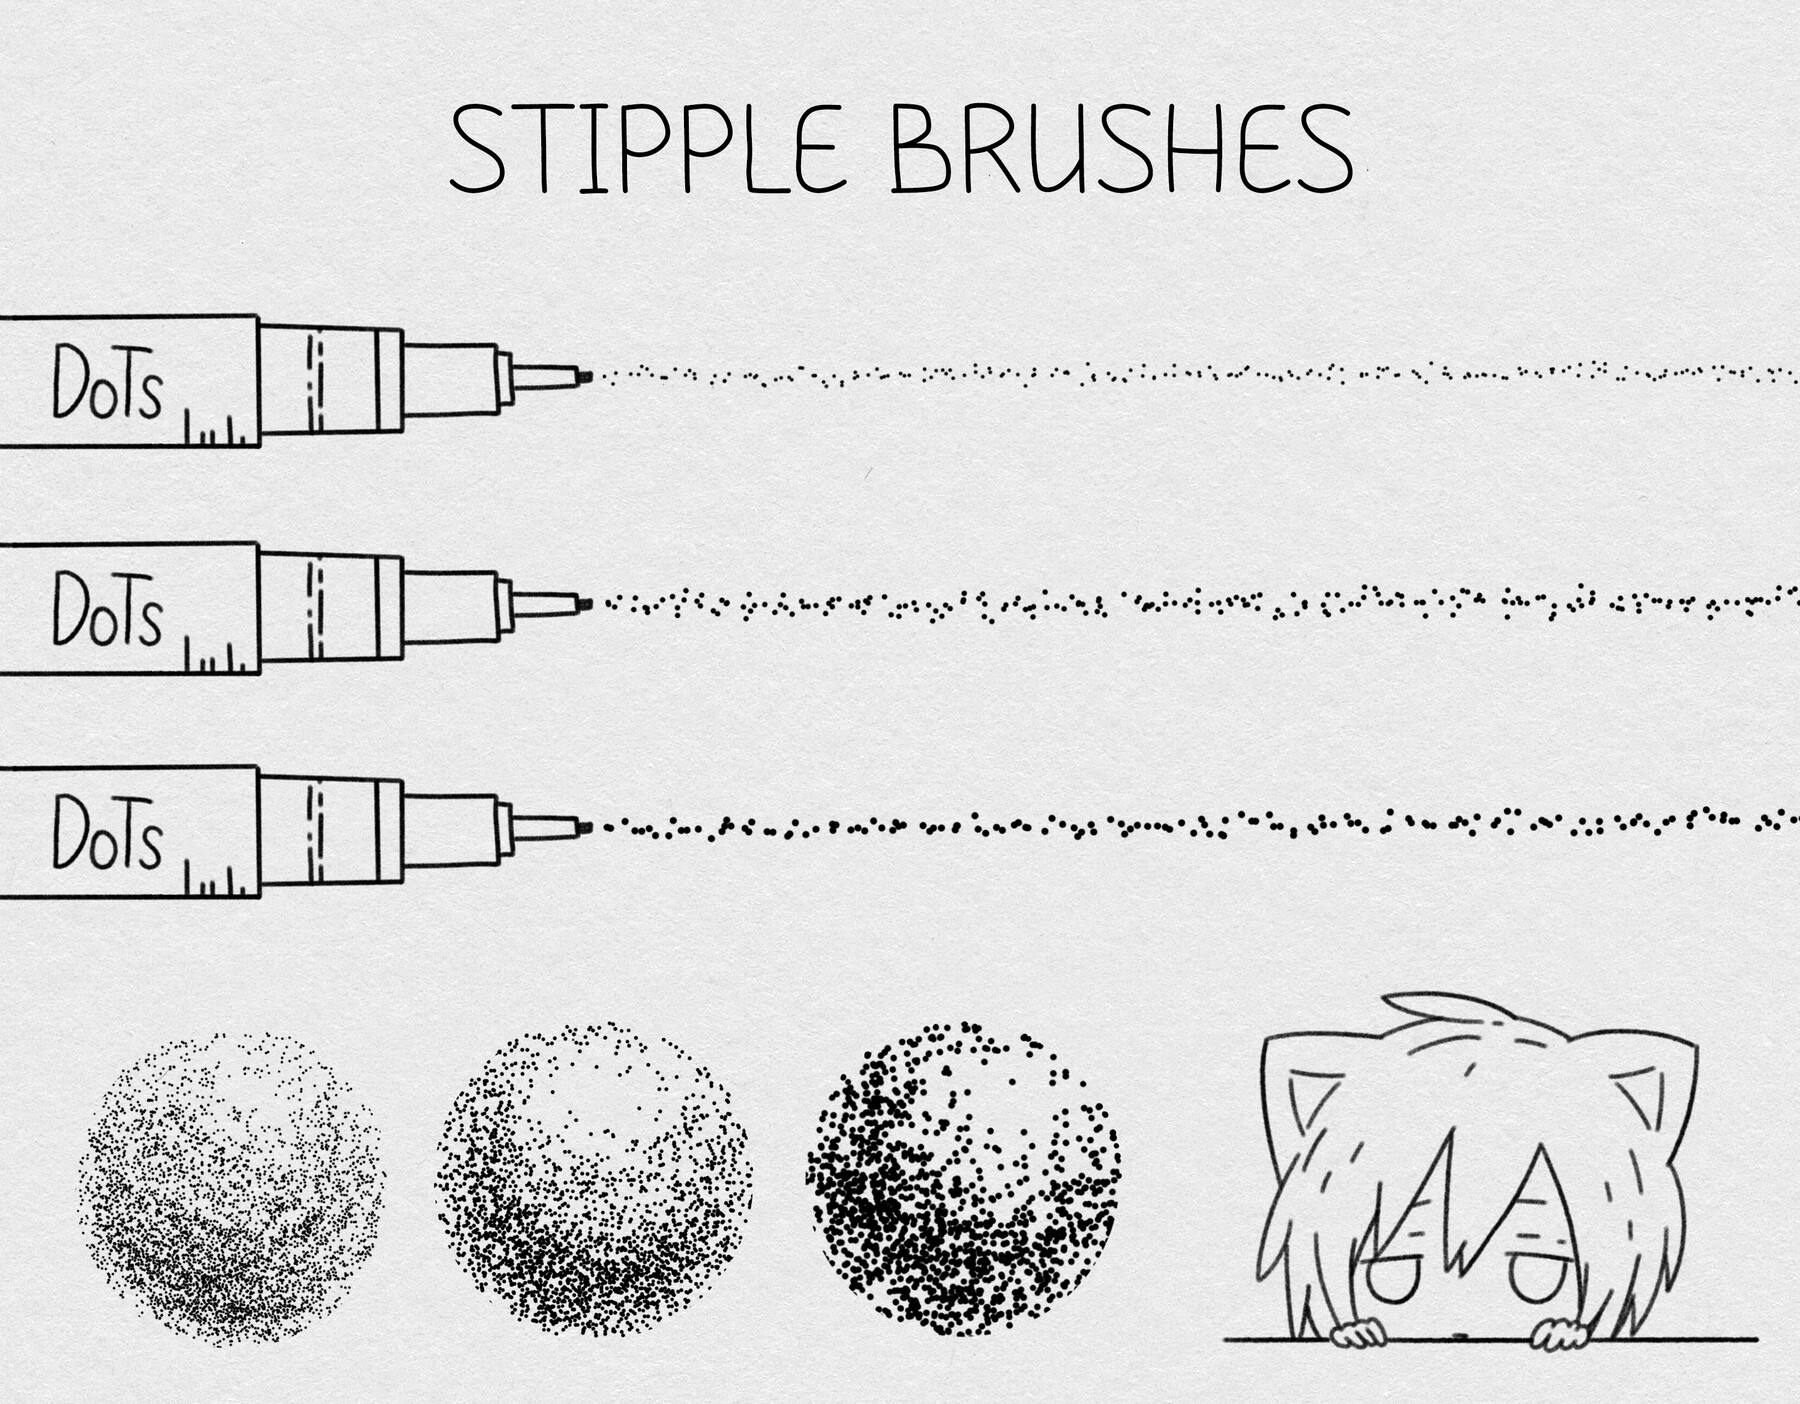 fine line procreate brush free